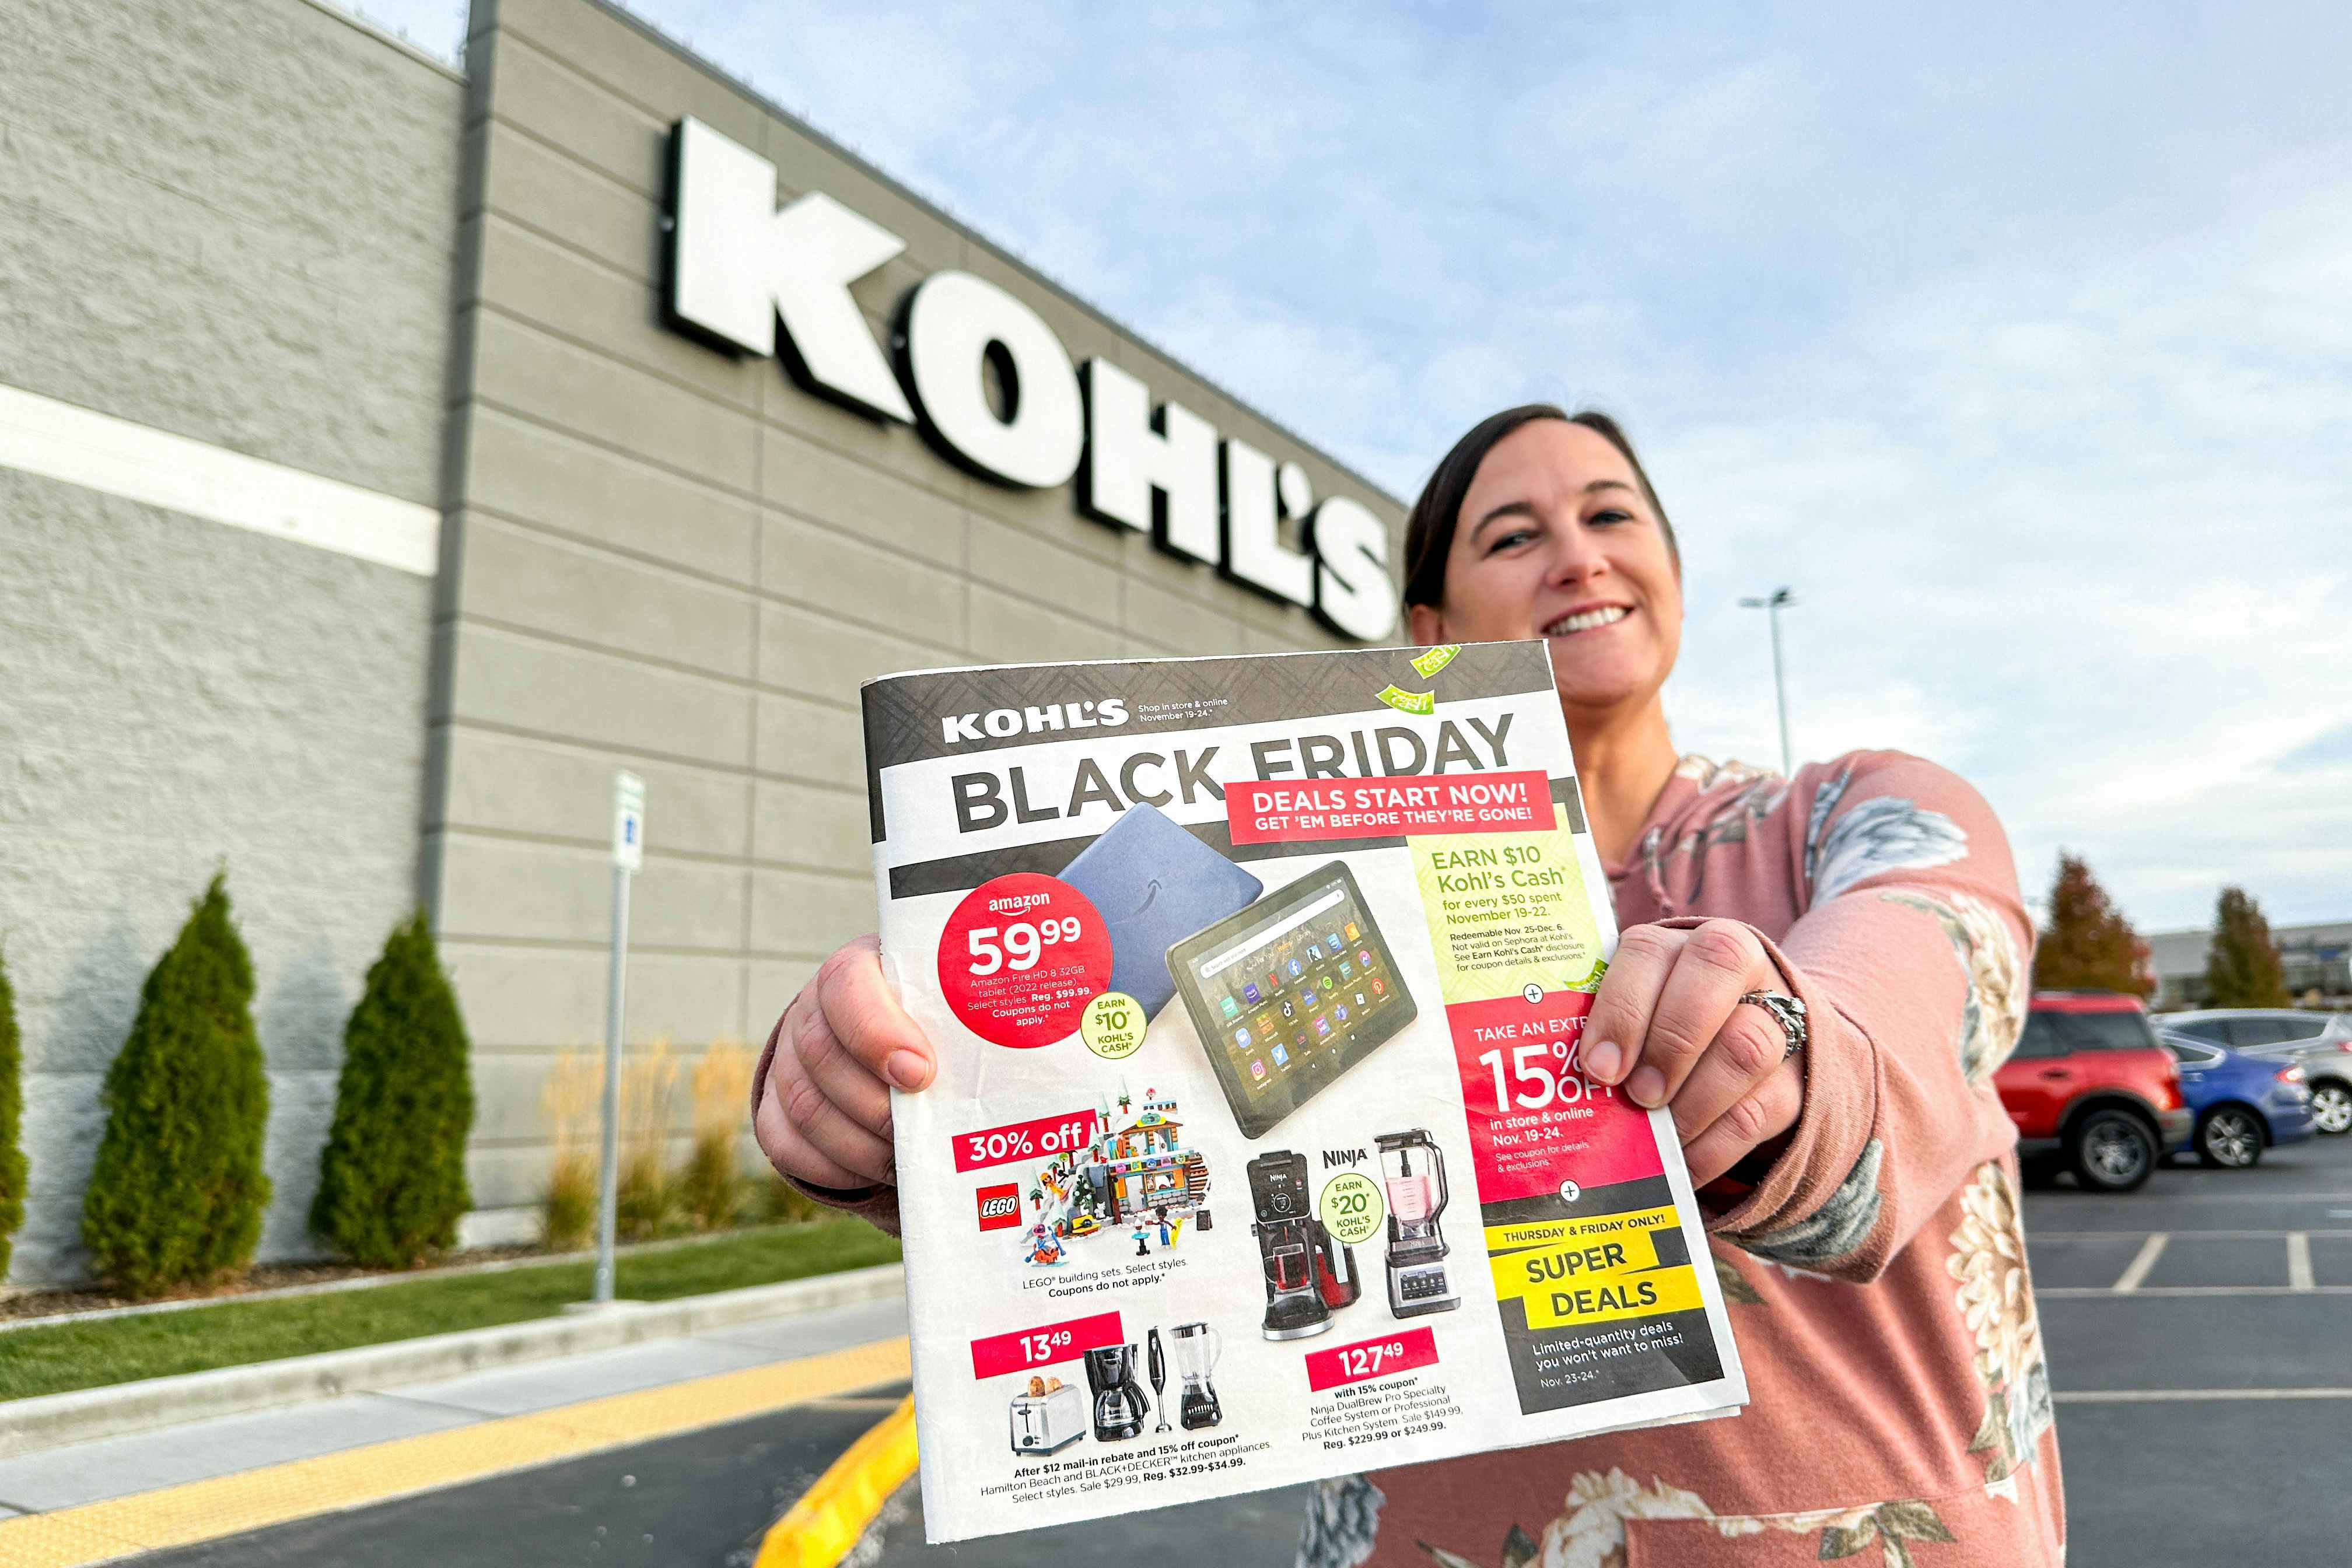 Kohl's Black Friday Ads: Amazing Deals Await!